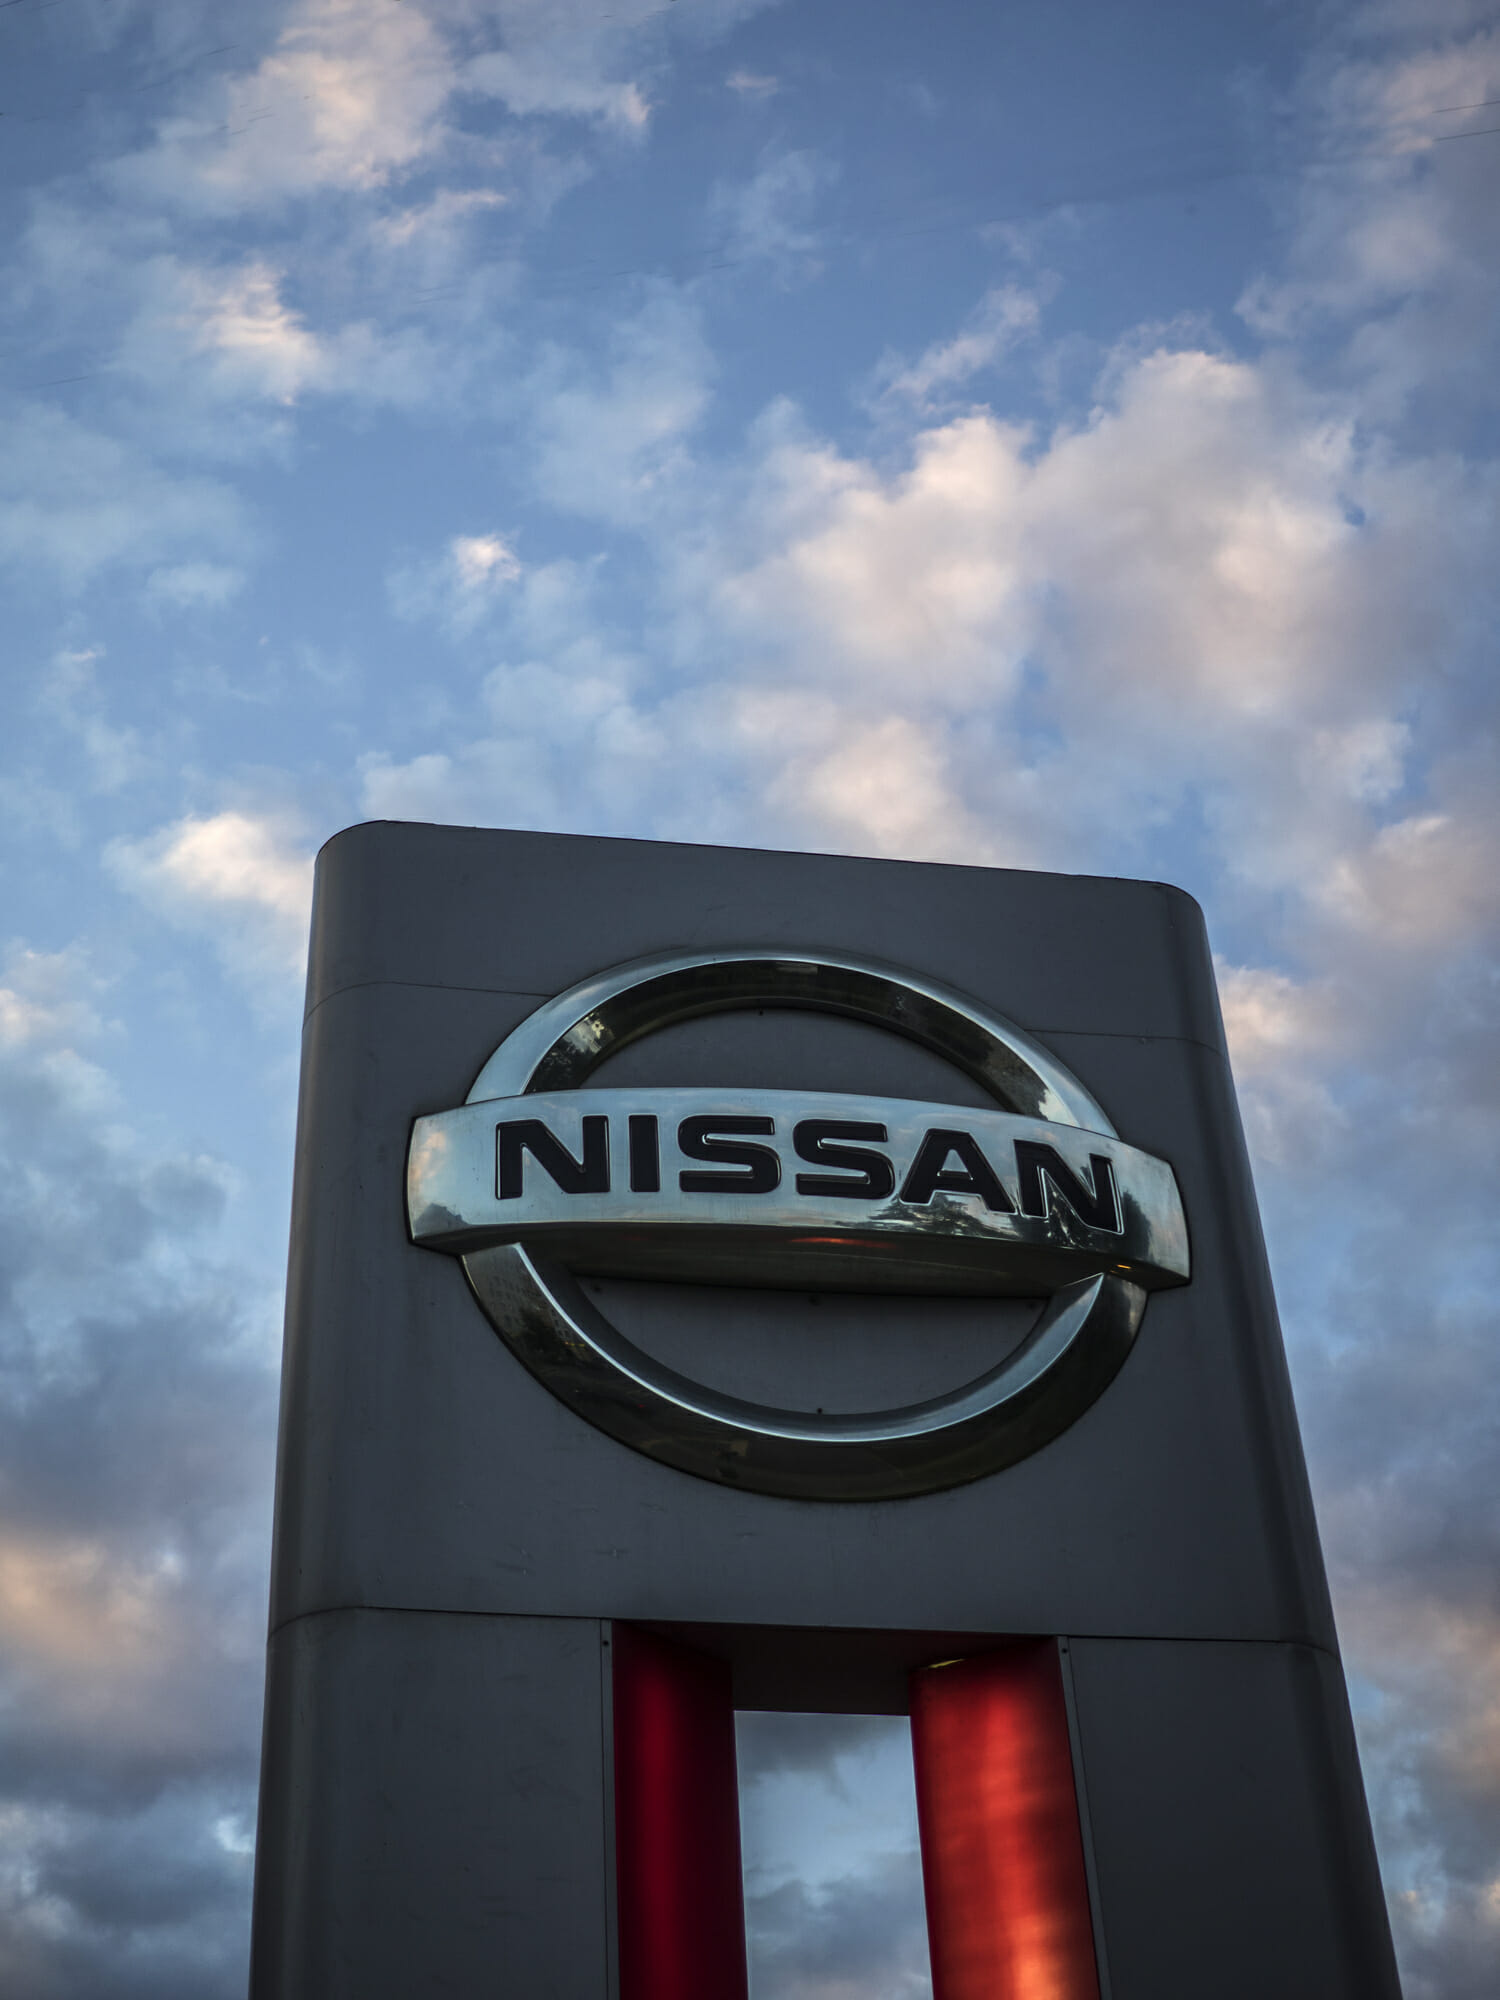 Nissan Transmission Problems